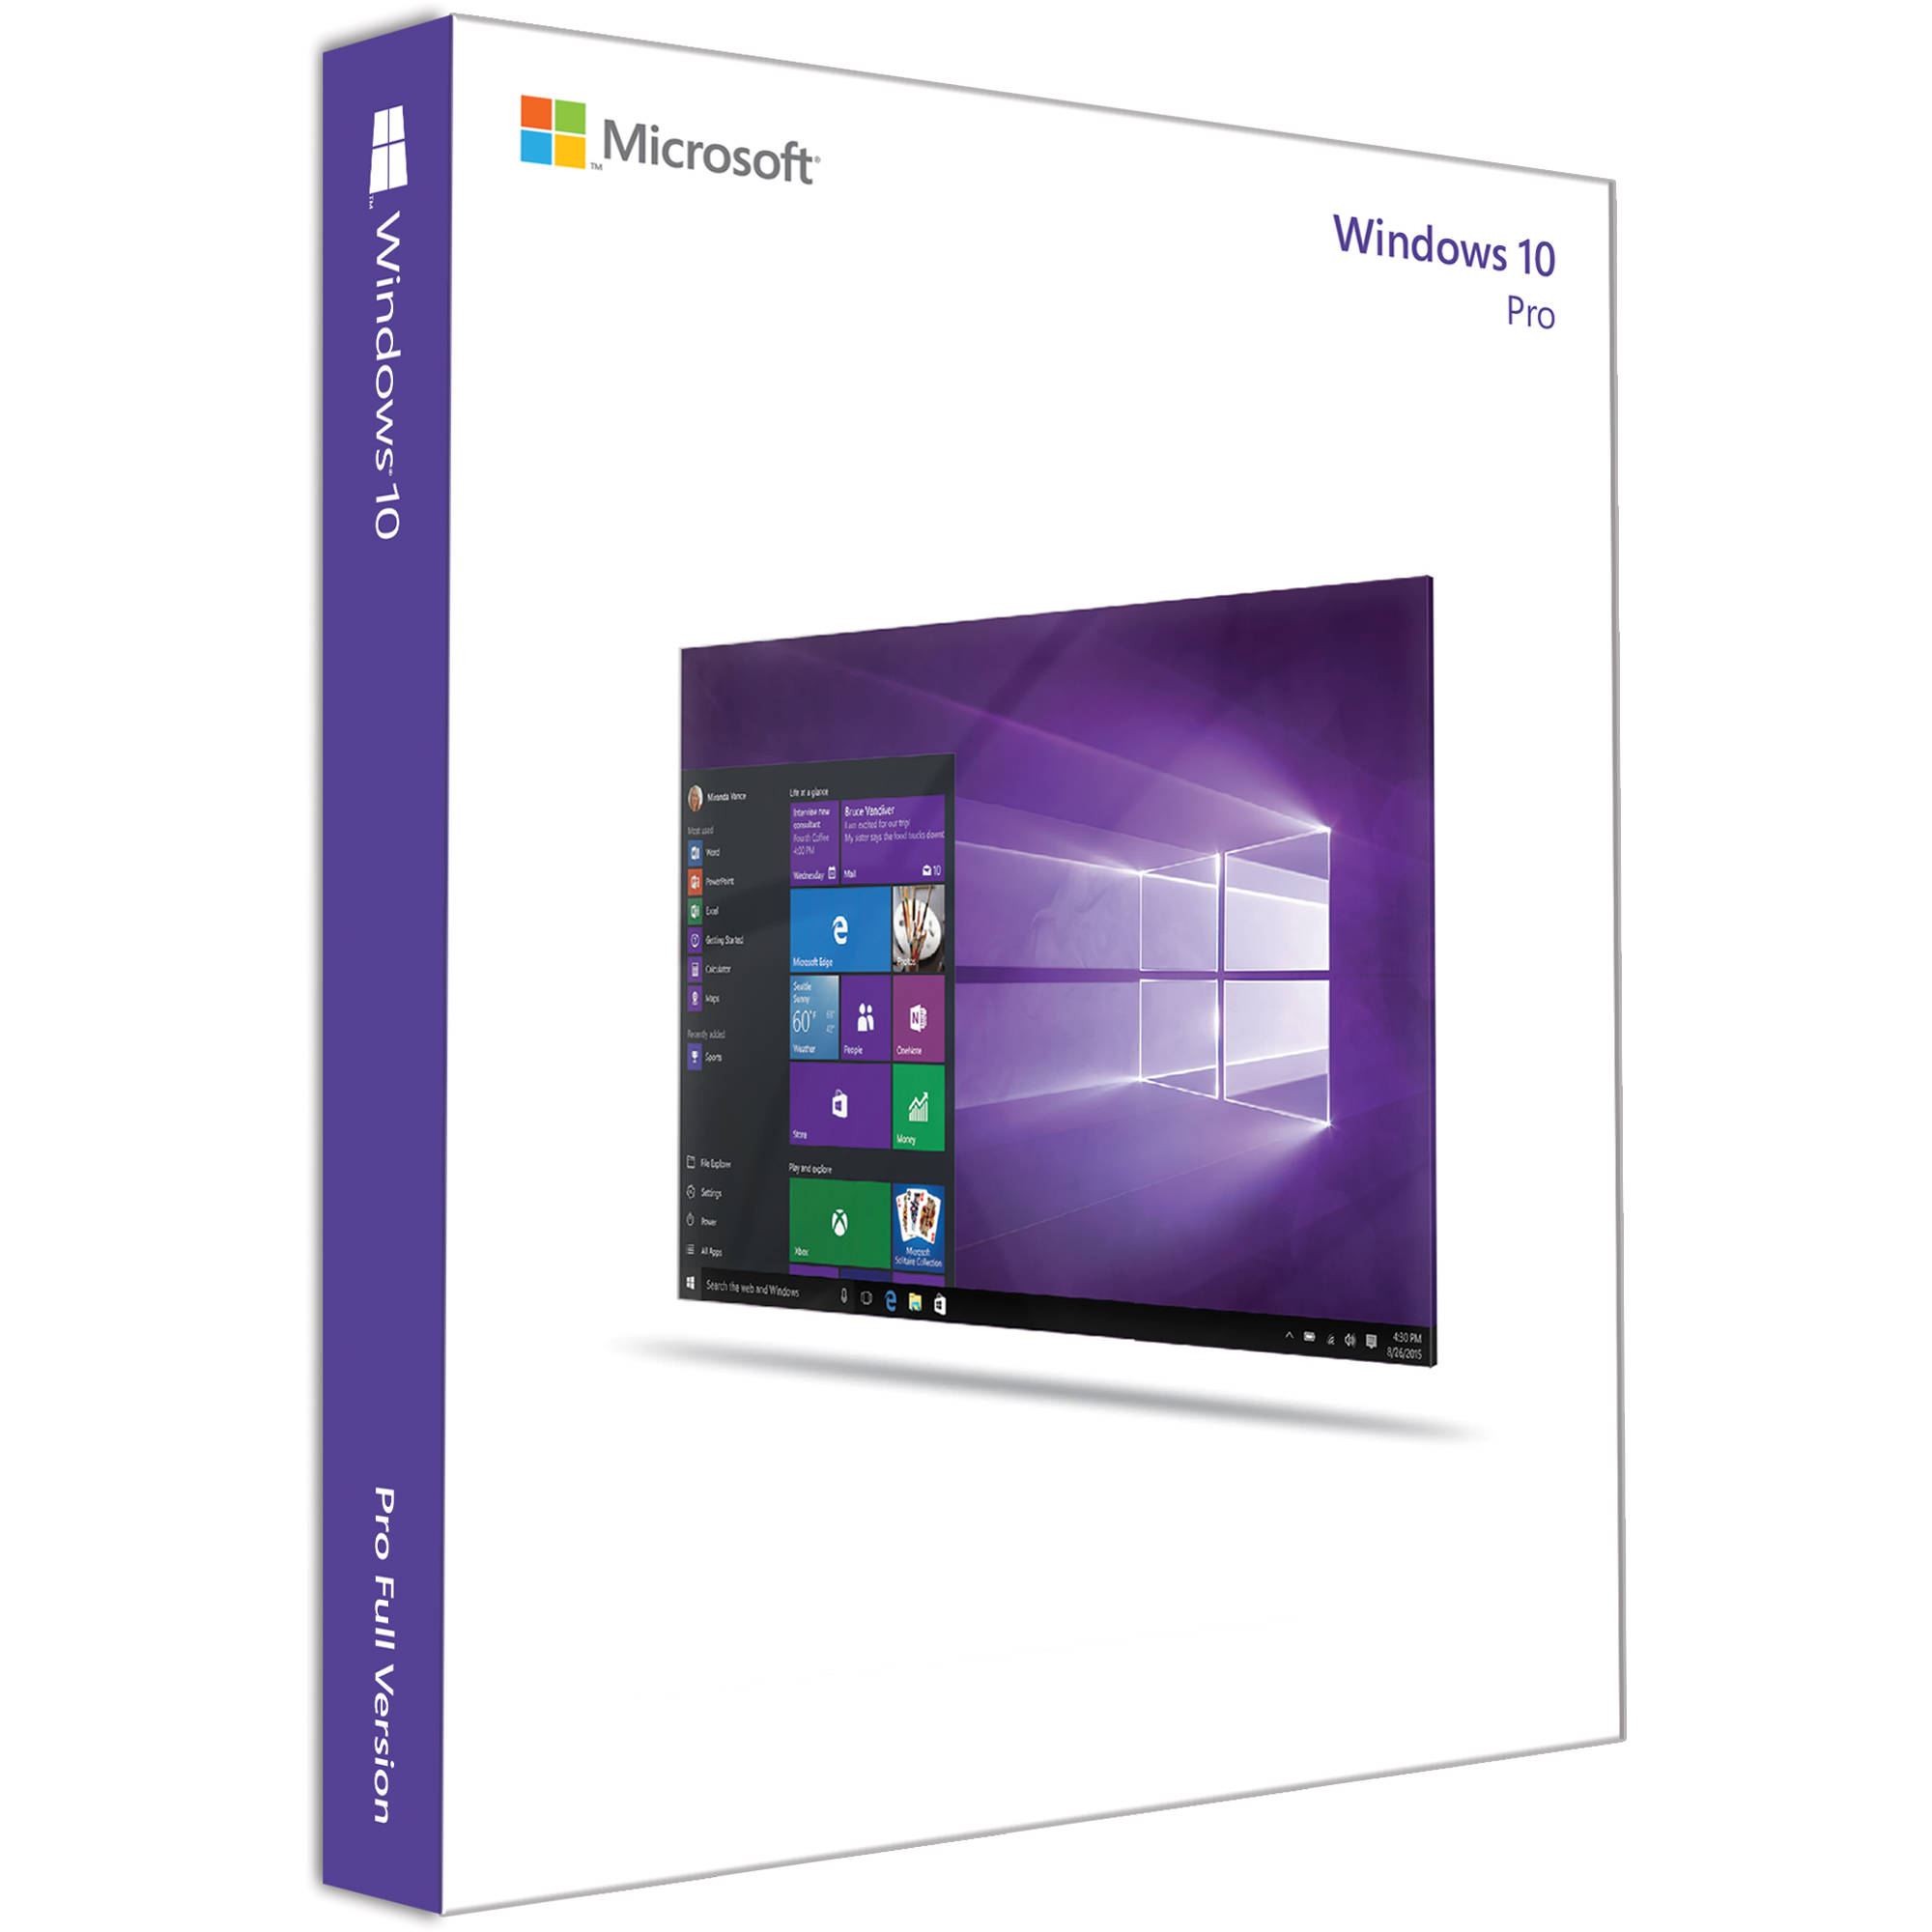 Microsoft Windows 10 Pro 64 Bit Oem Dvd Fqc 08930 B H Photo